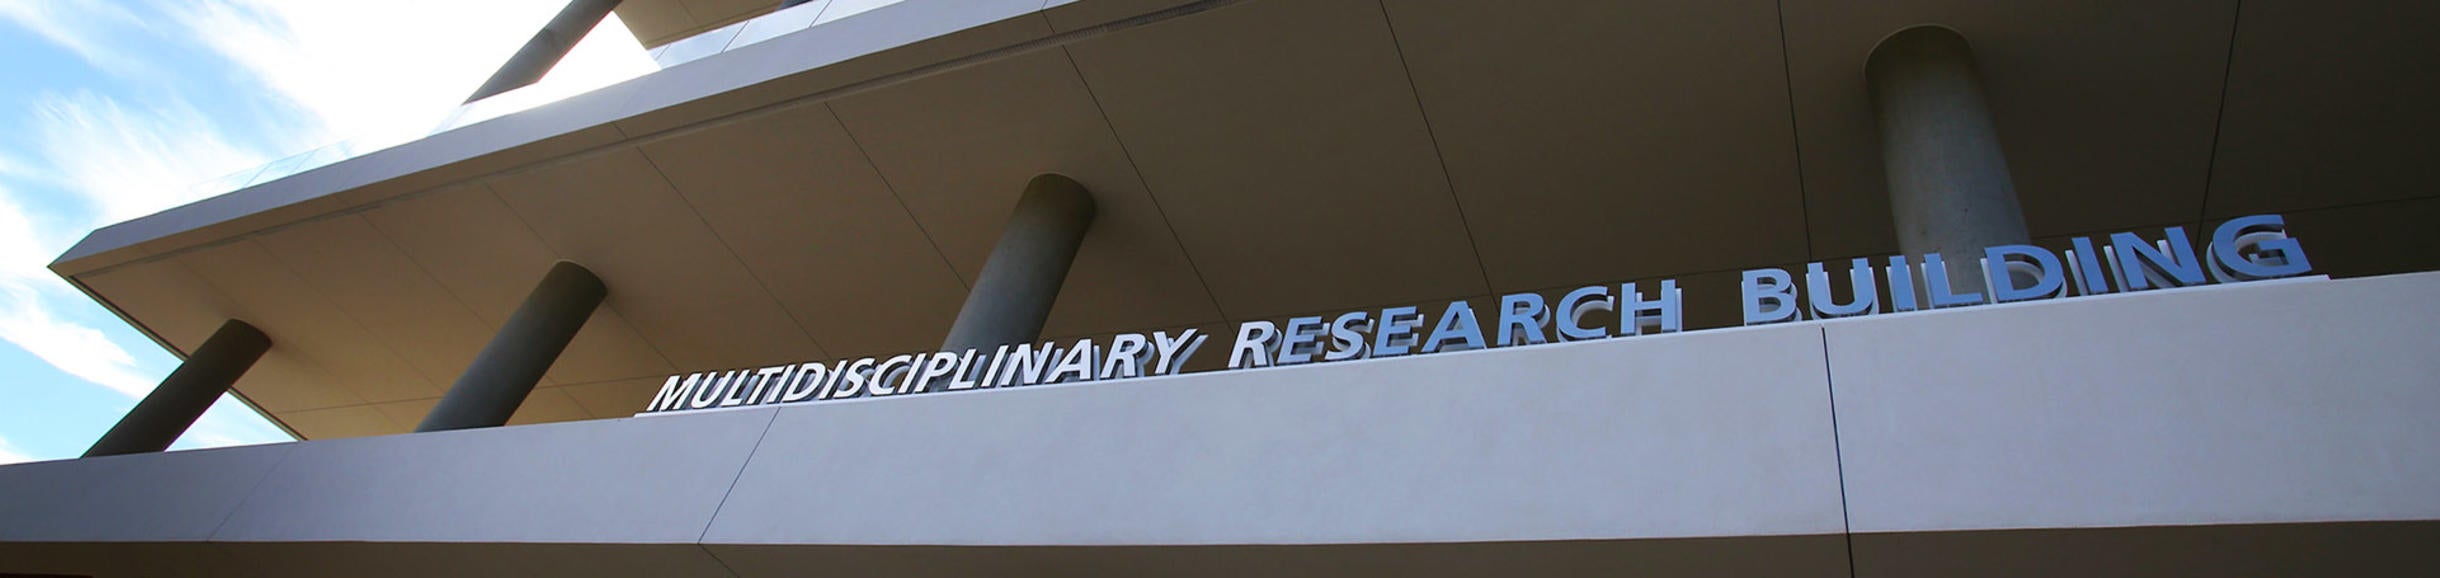 Multidisciplinary Research Building (c) UCR / Stan Lim